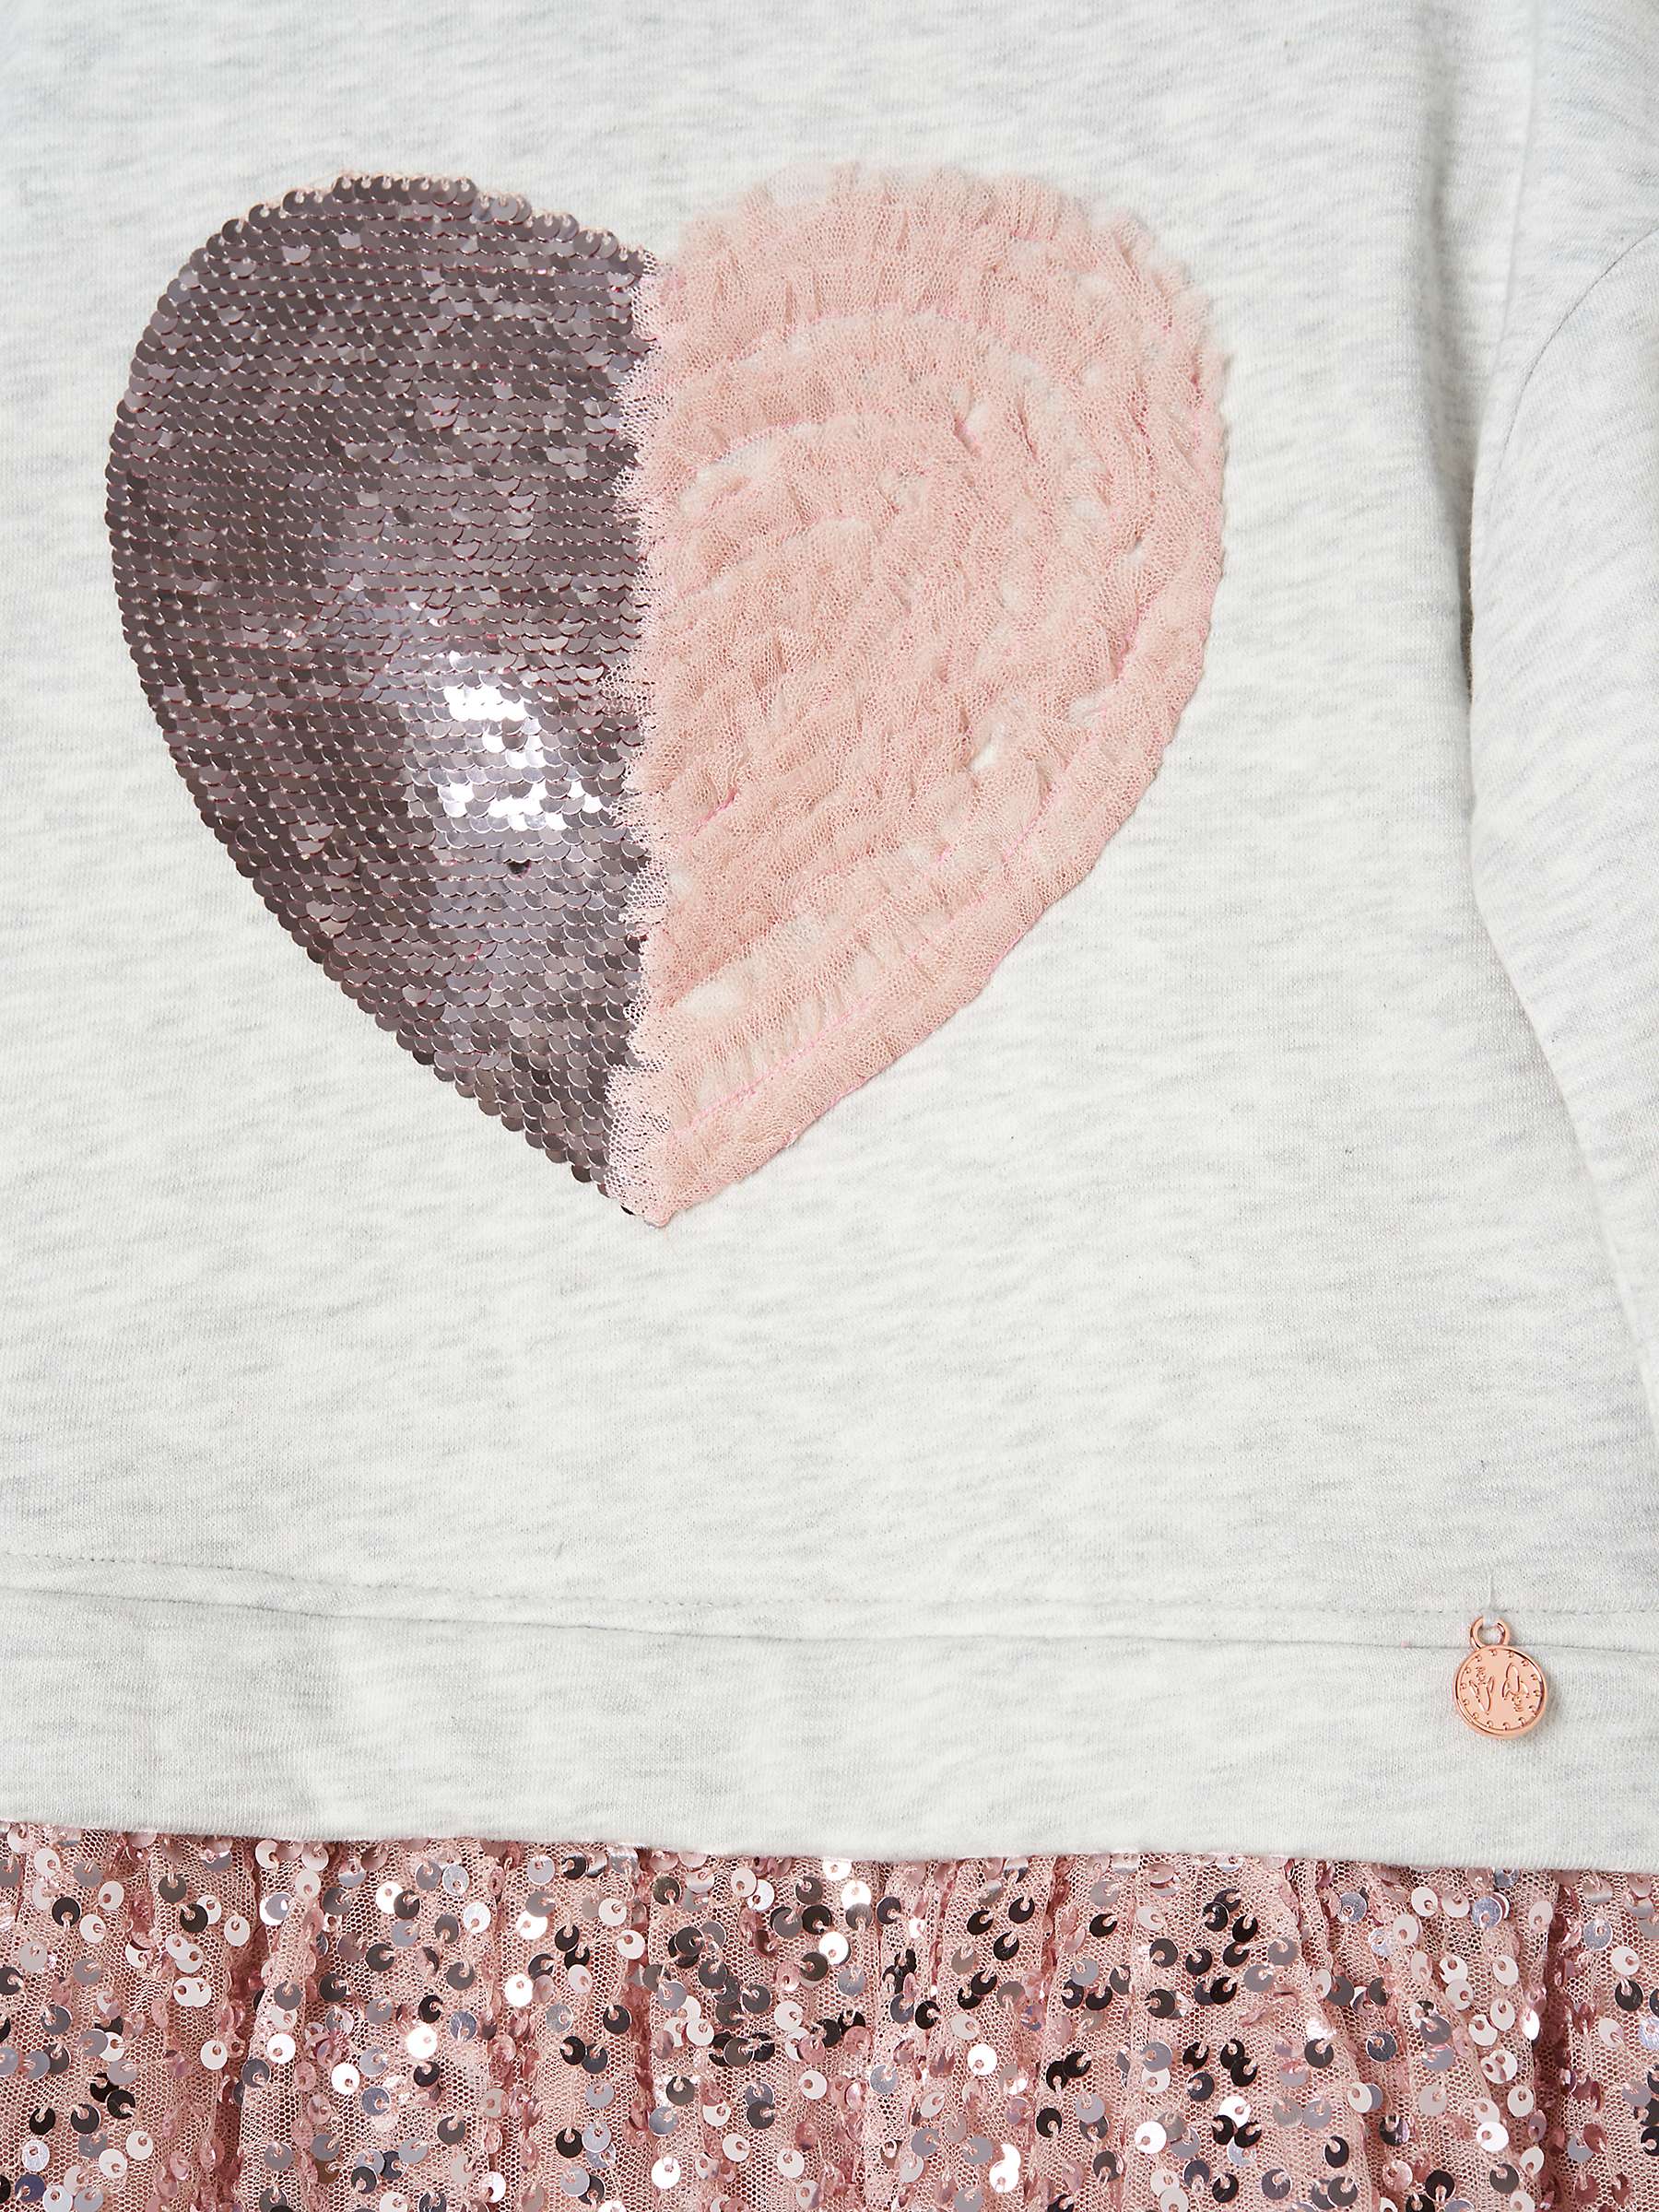 Buy Angel & Rocket Kids' Madelyn Sequin Sweatshirt Dress, Grey/Pink Online at johnlewis.com